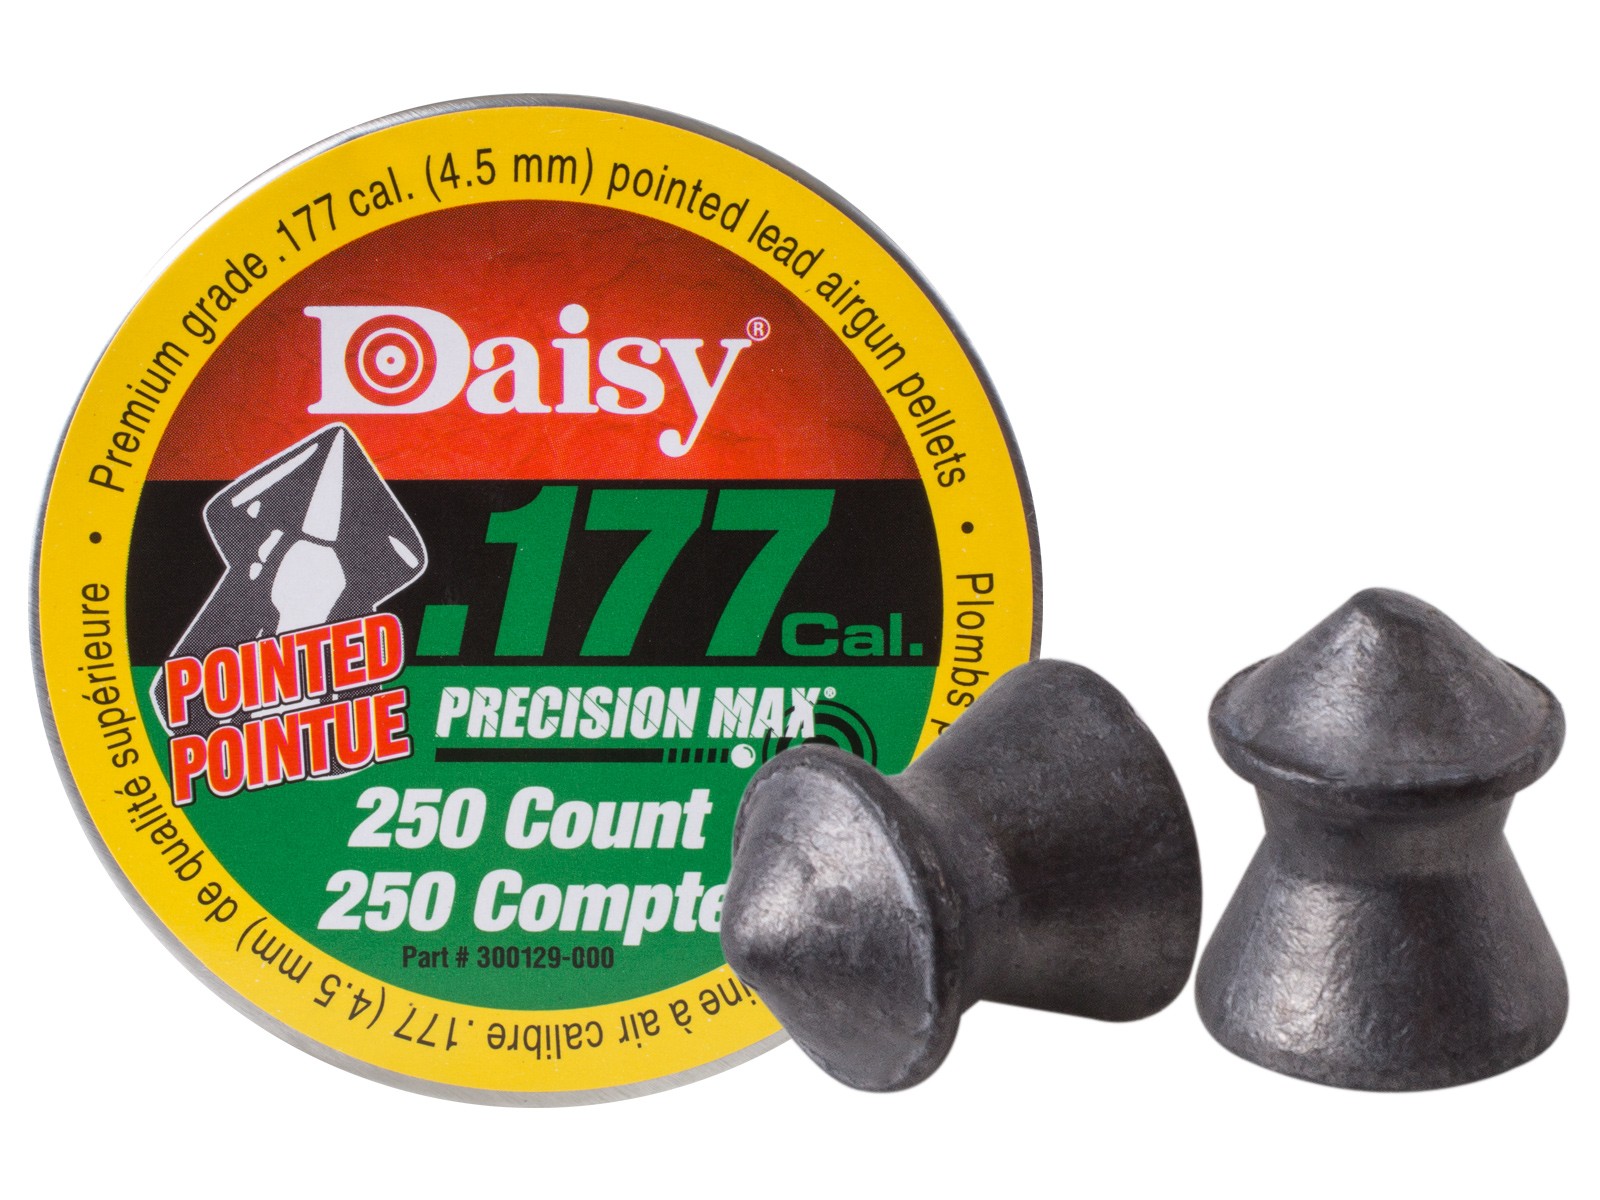 Daisy Max Precision .177 Cal, 7.2 Grains, Pointed, 250ct